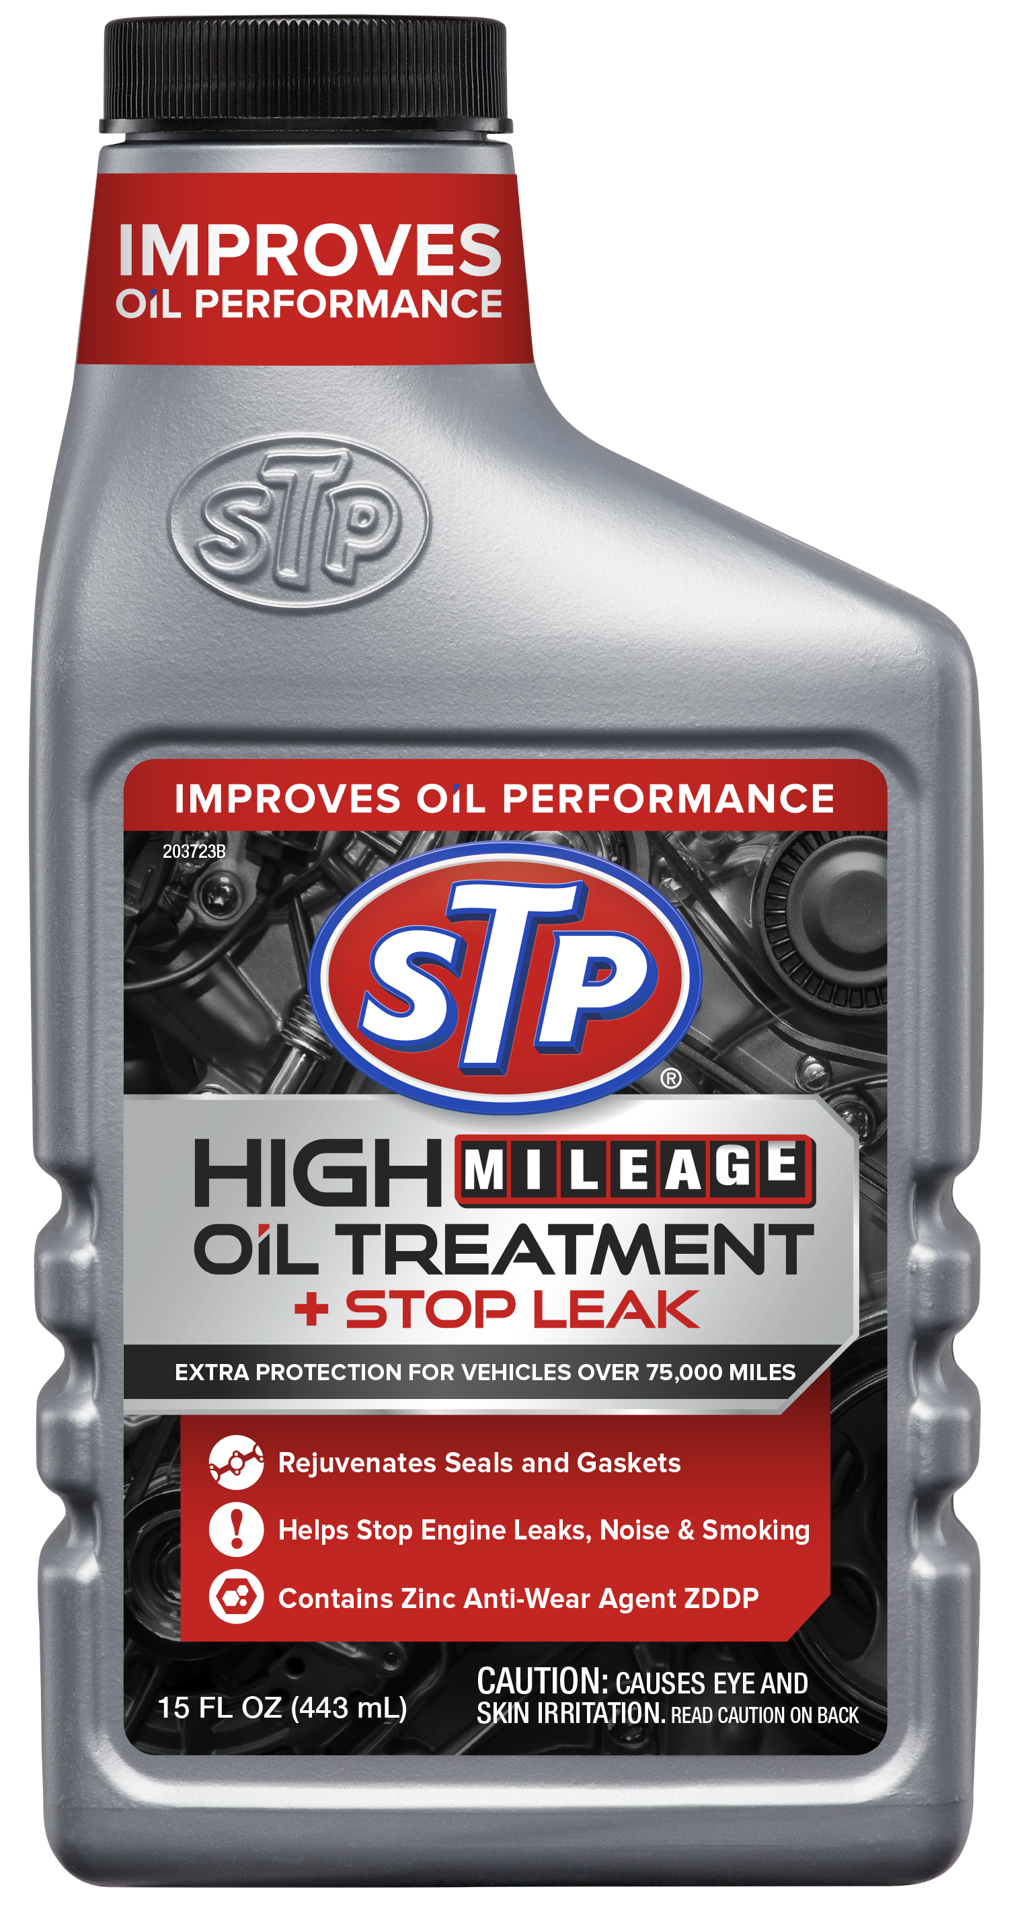 slide 1 of 9, STP High Mileage Oil Treatment + Stop Leak - 15 FL OZ, 15 fl oz